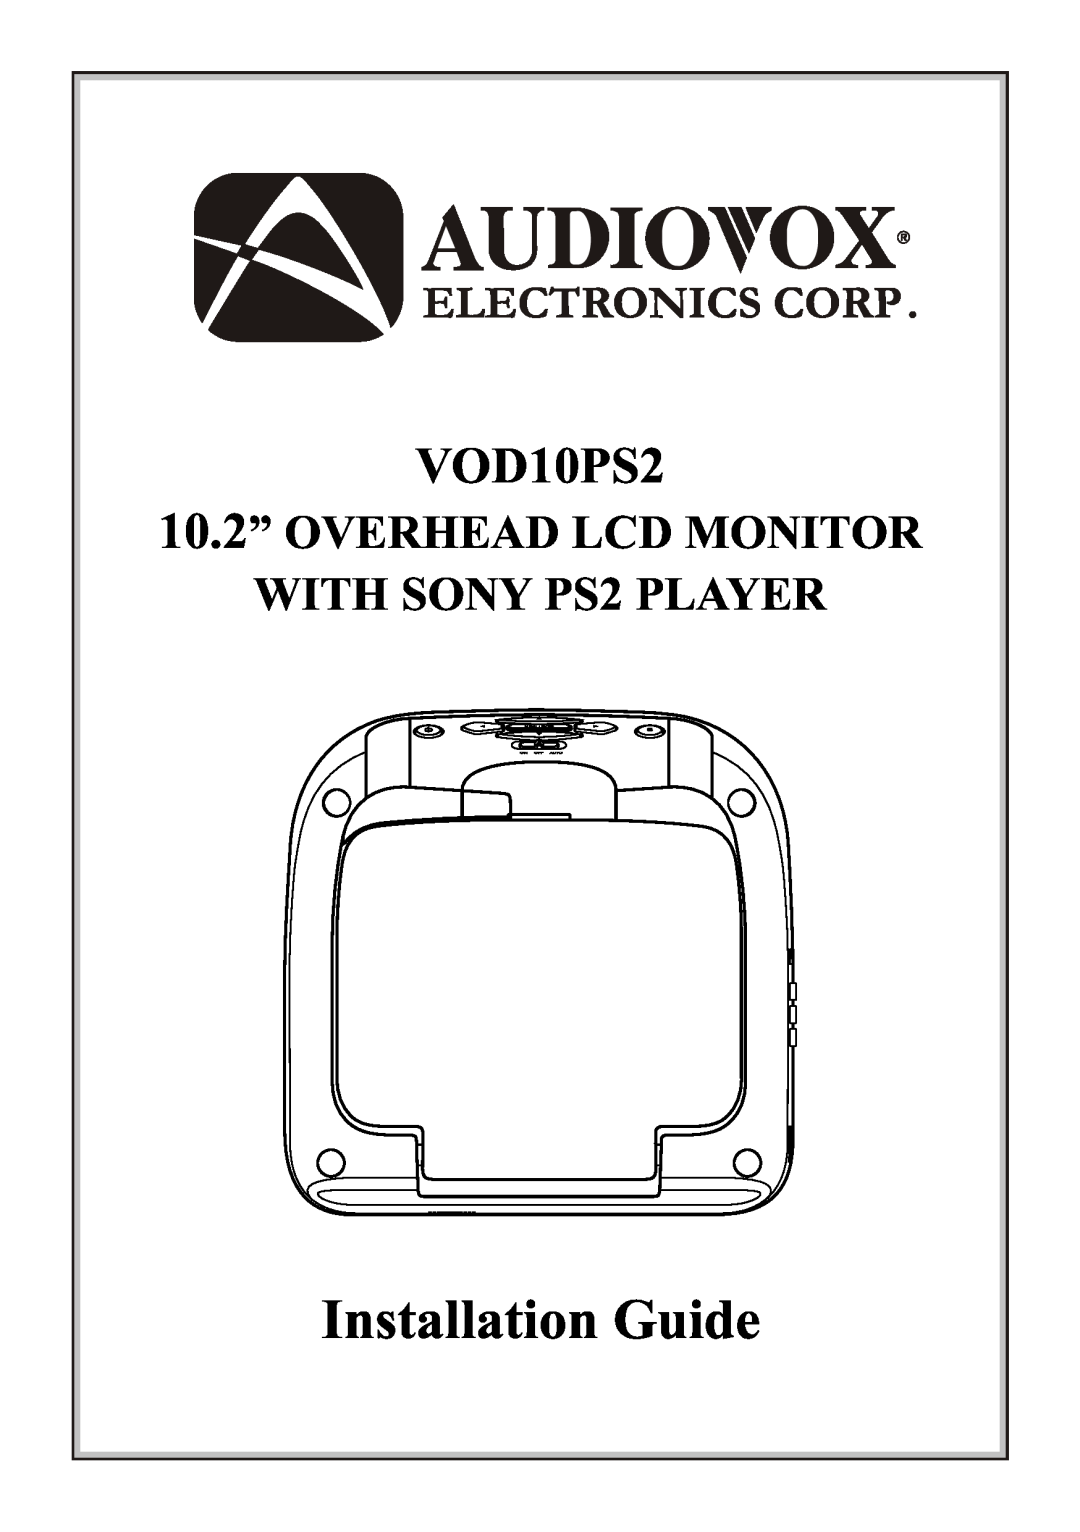 Audiovox VOD10PS2 manual 